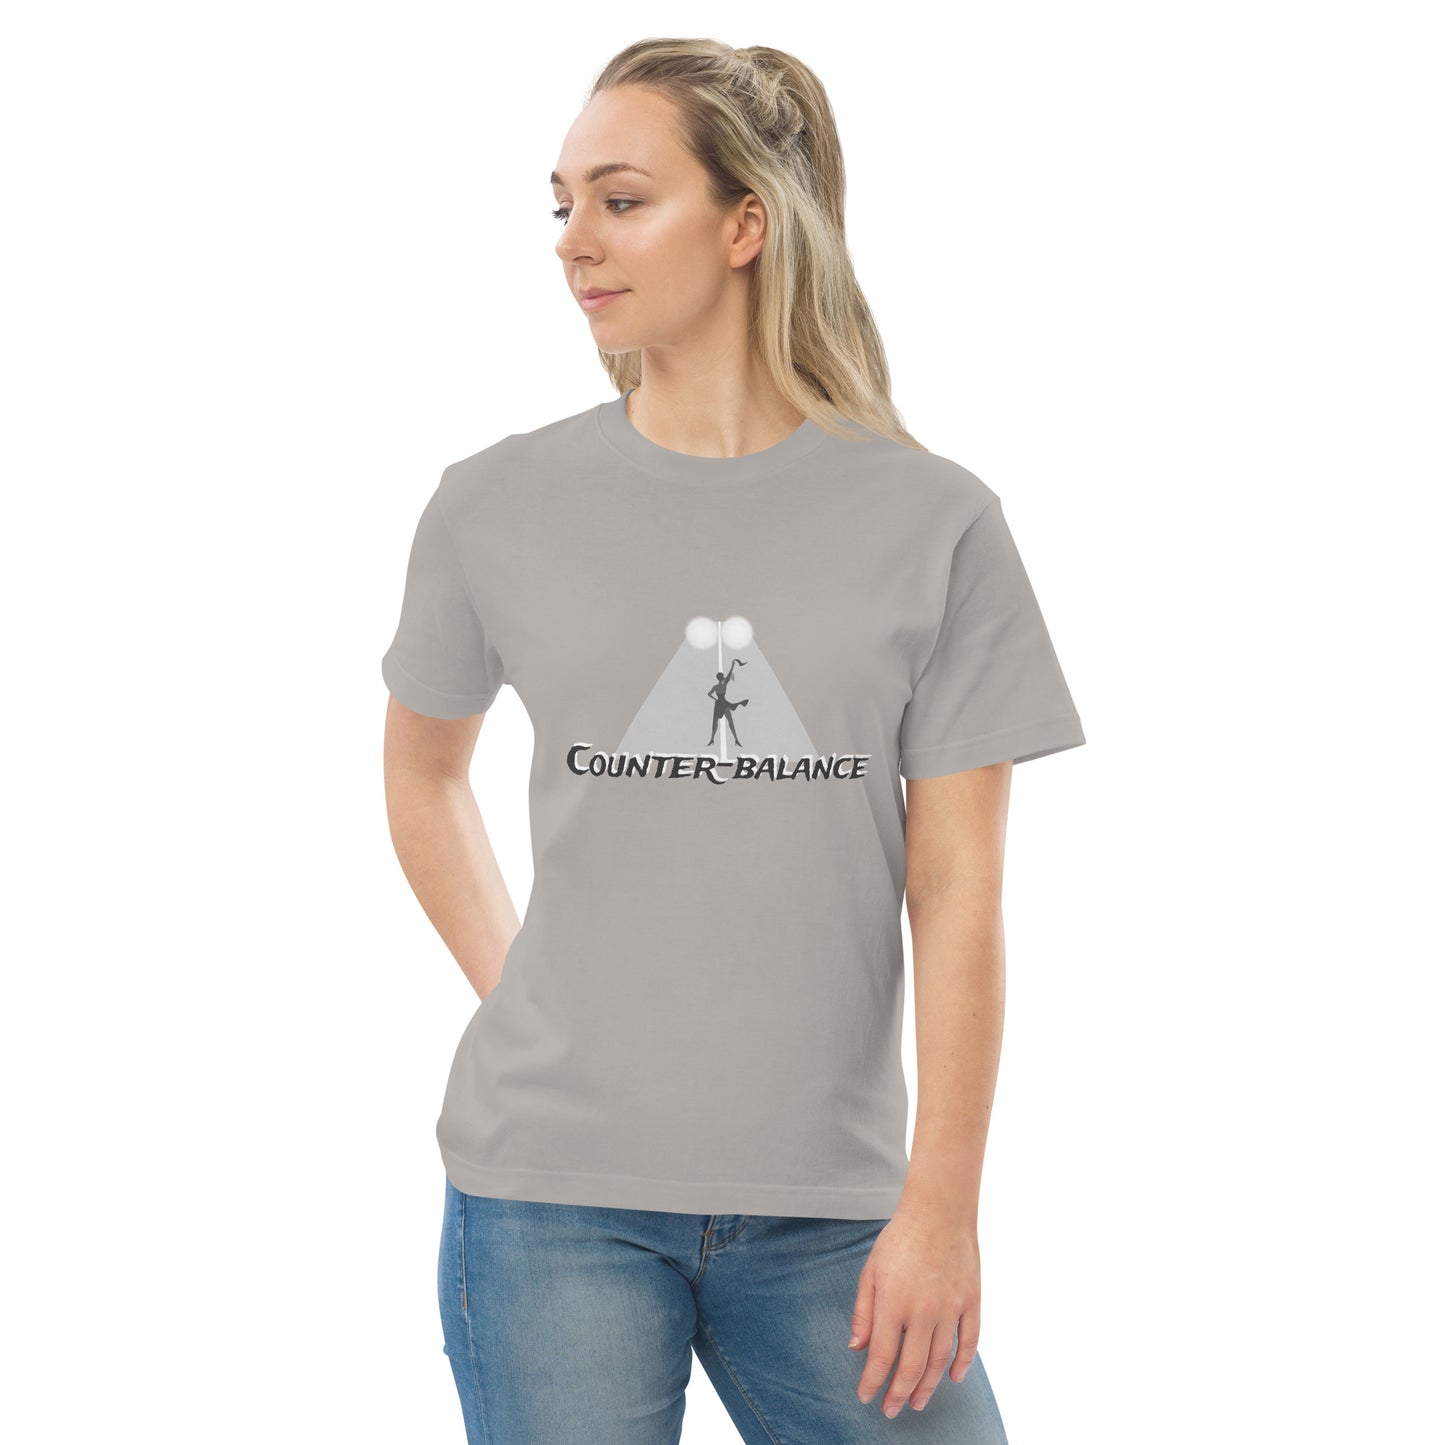 P011 - High Quality Cotton T-shirt (Get set! : Gray/Charcoal)